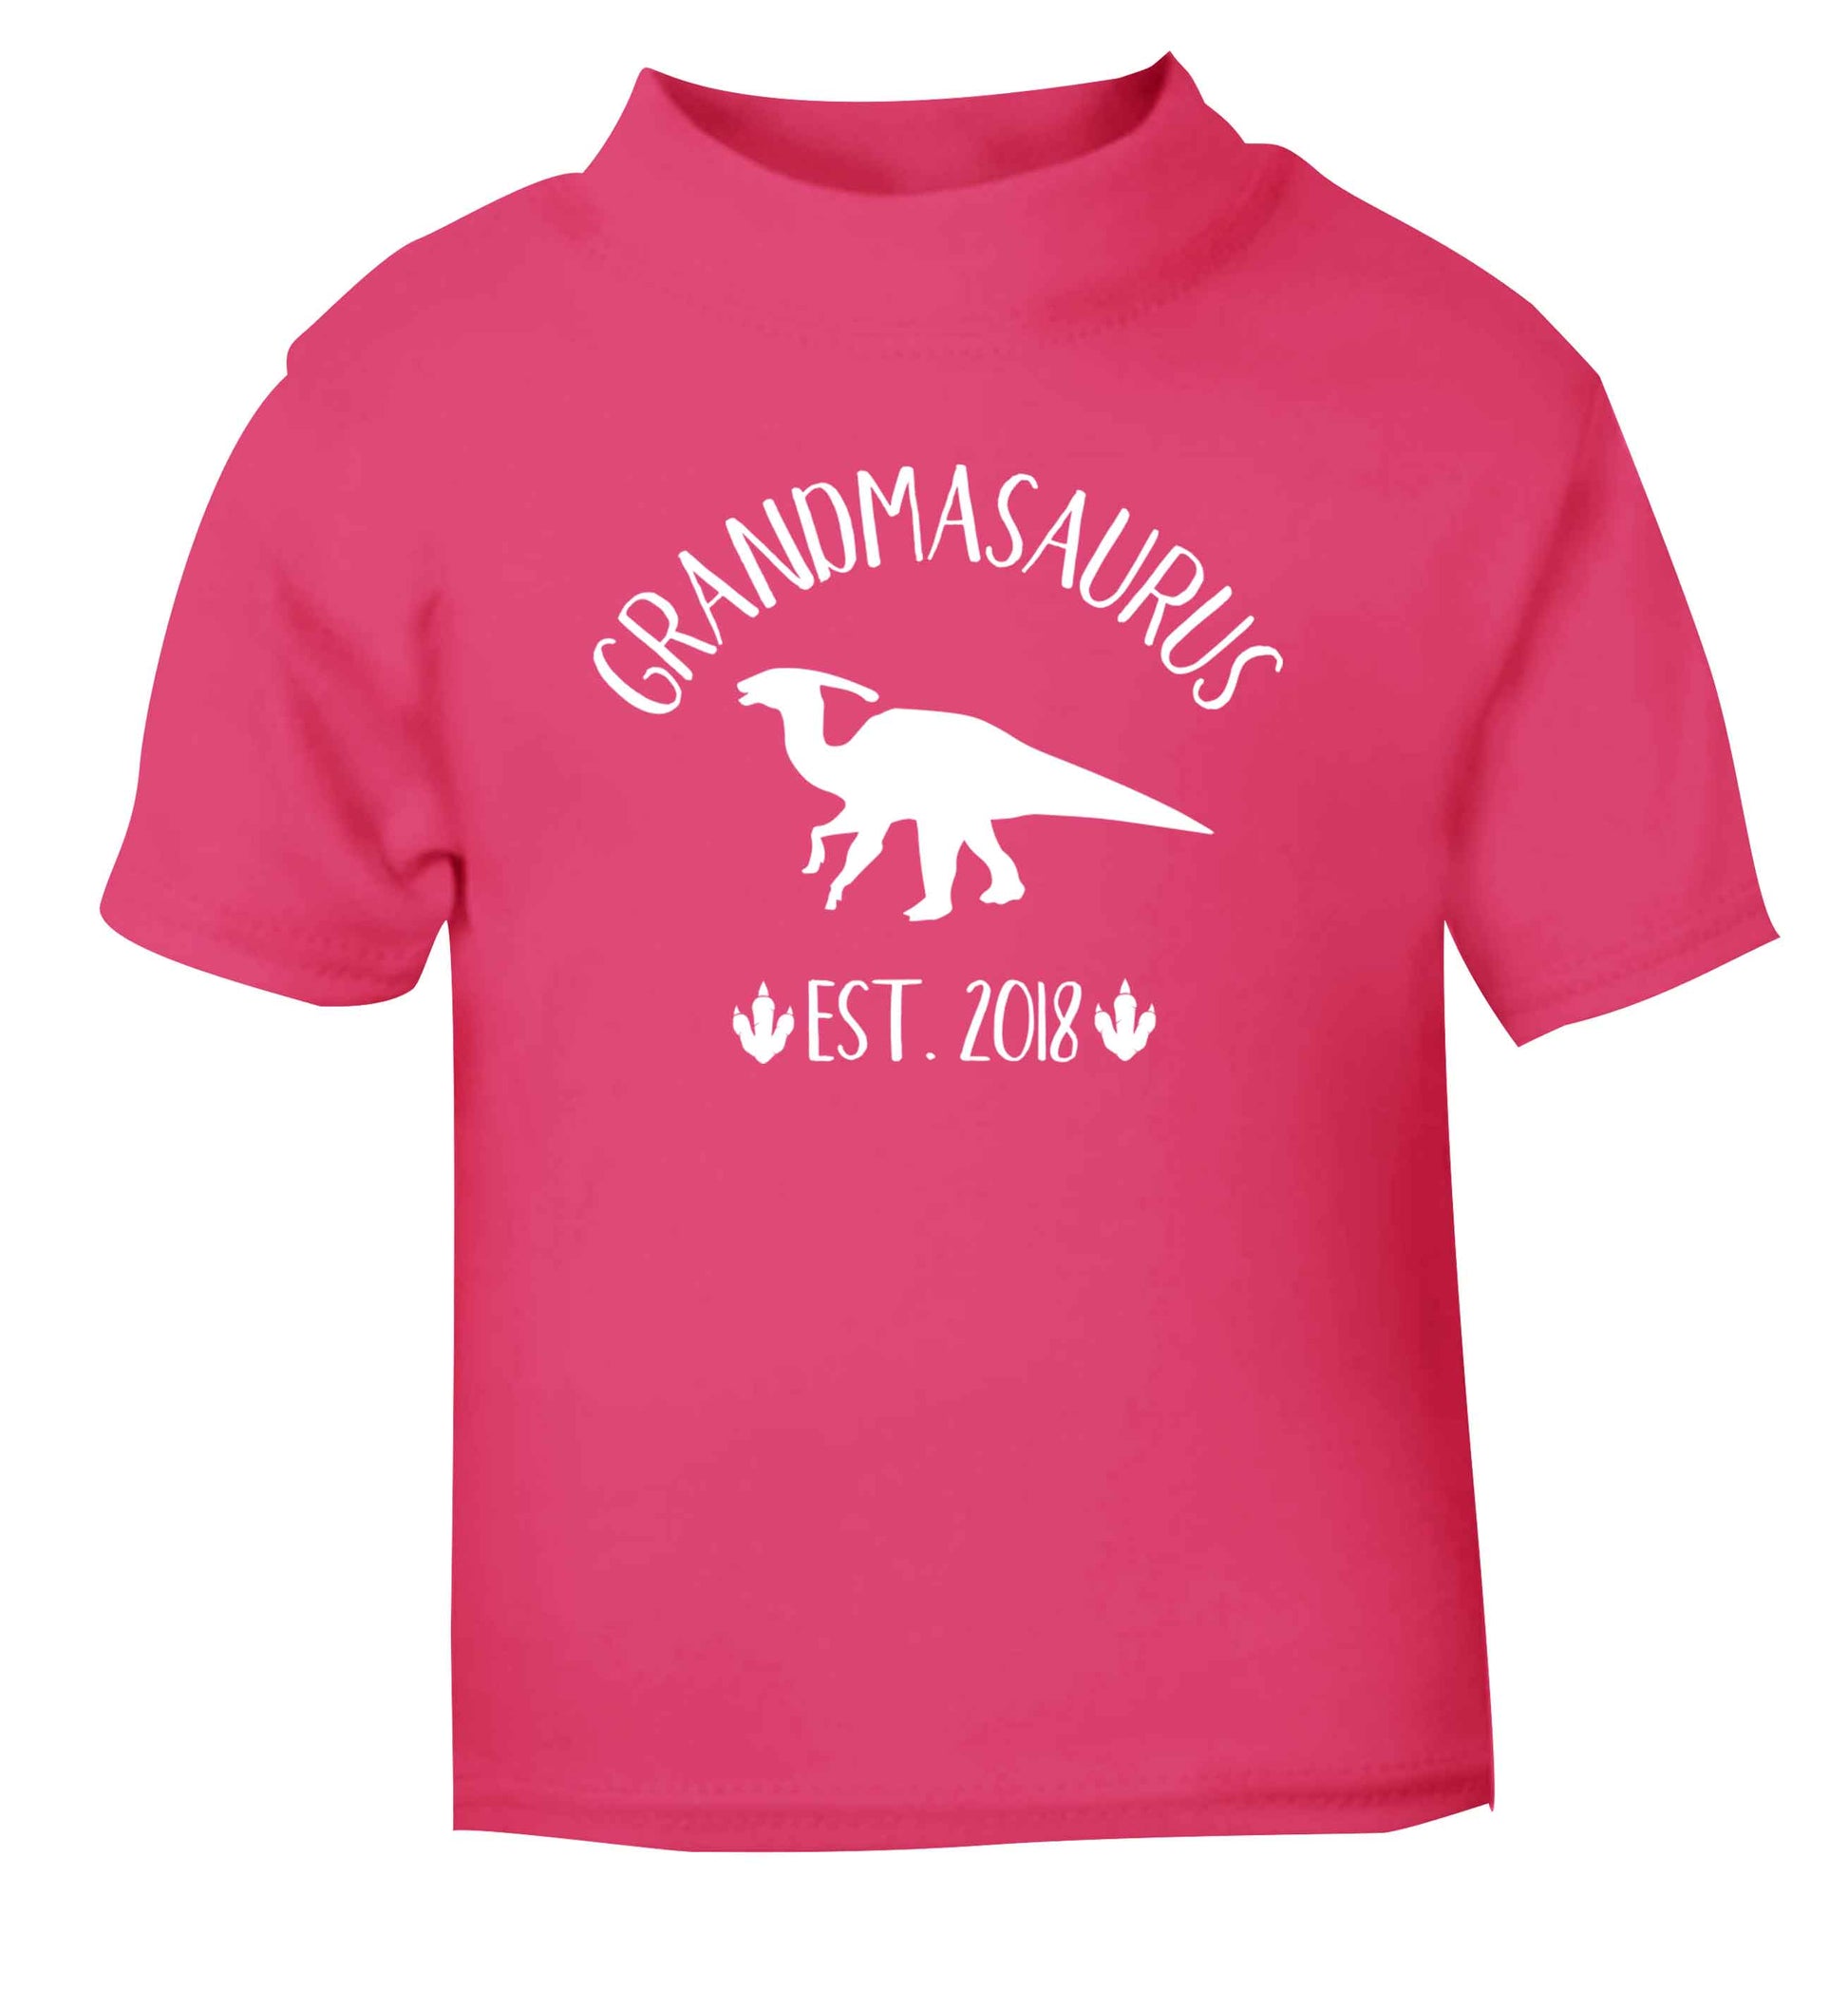 Personalised grandmasaurus since (custom date) pink Baby Toddler Tshirt 2 Years